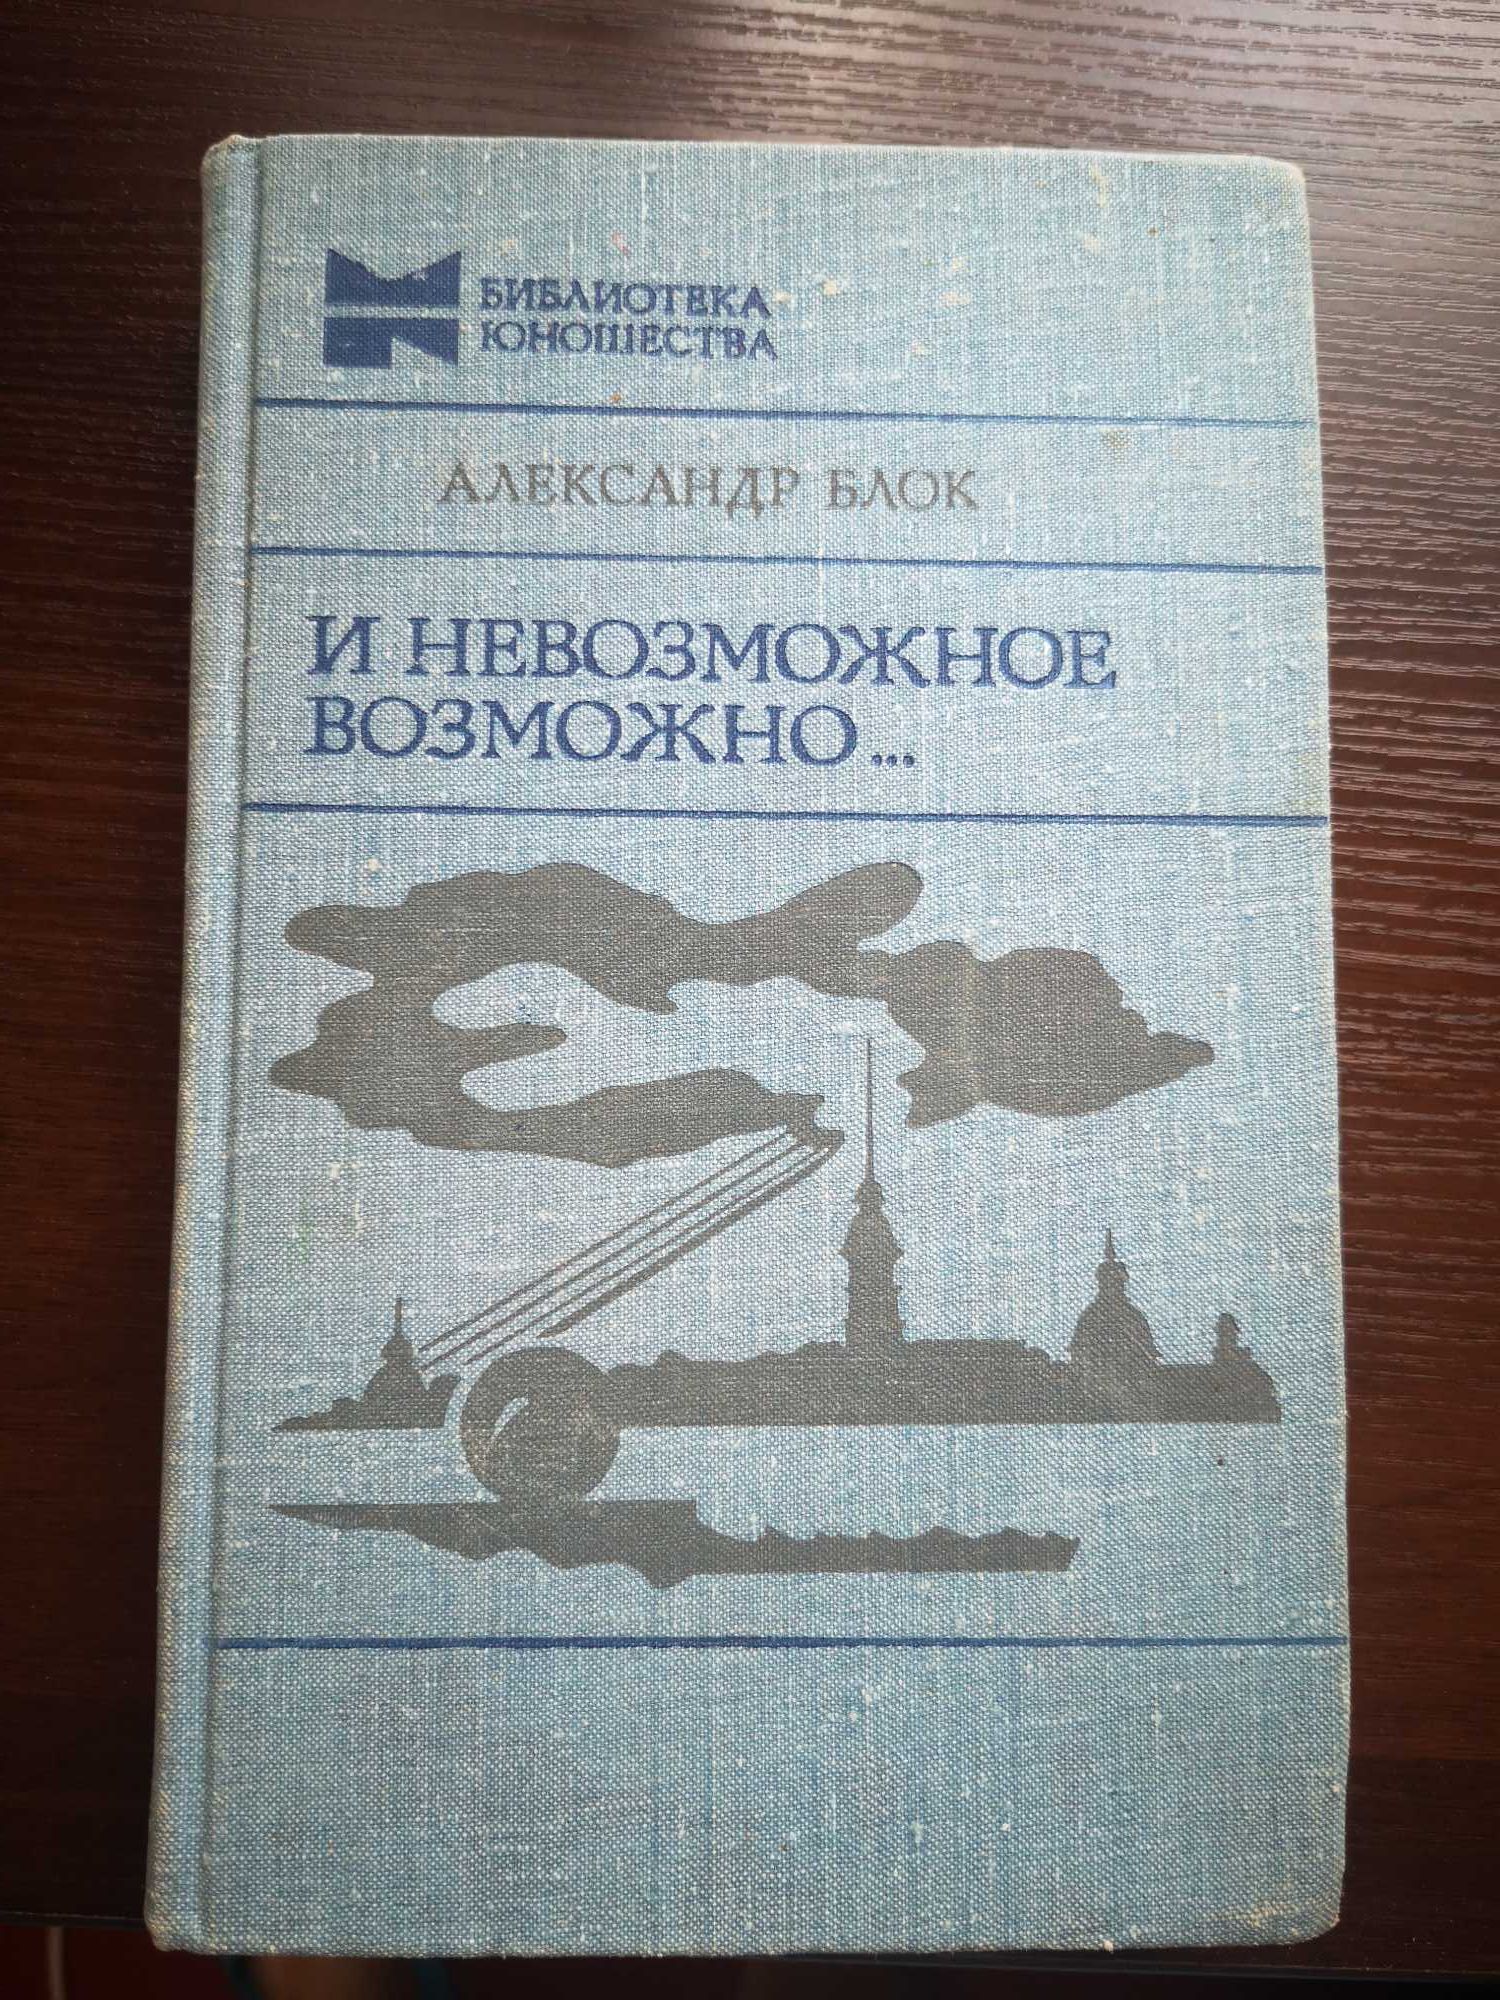 Книга Александр Блок "И невозможное возможно"